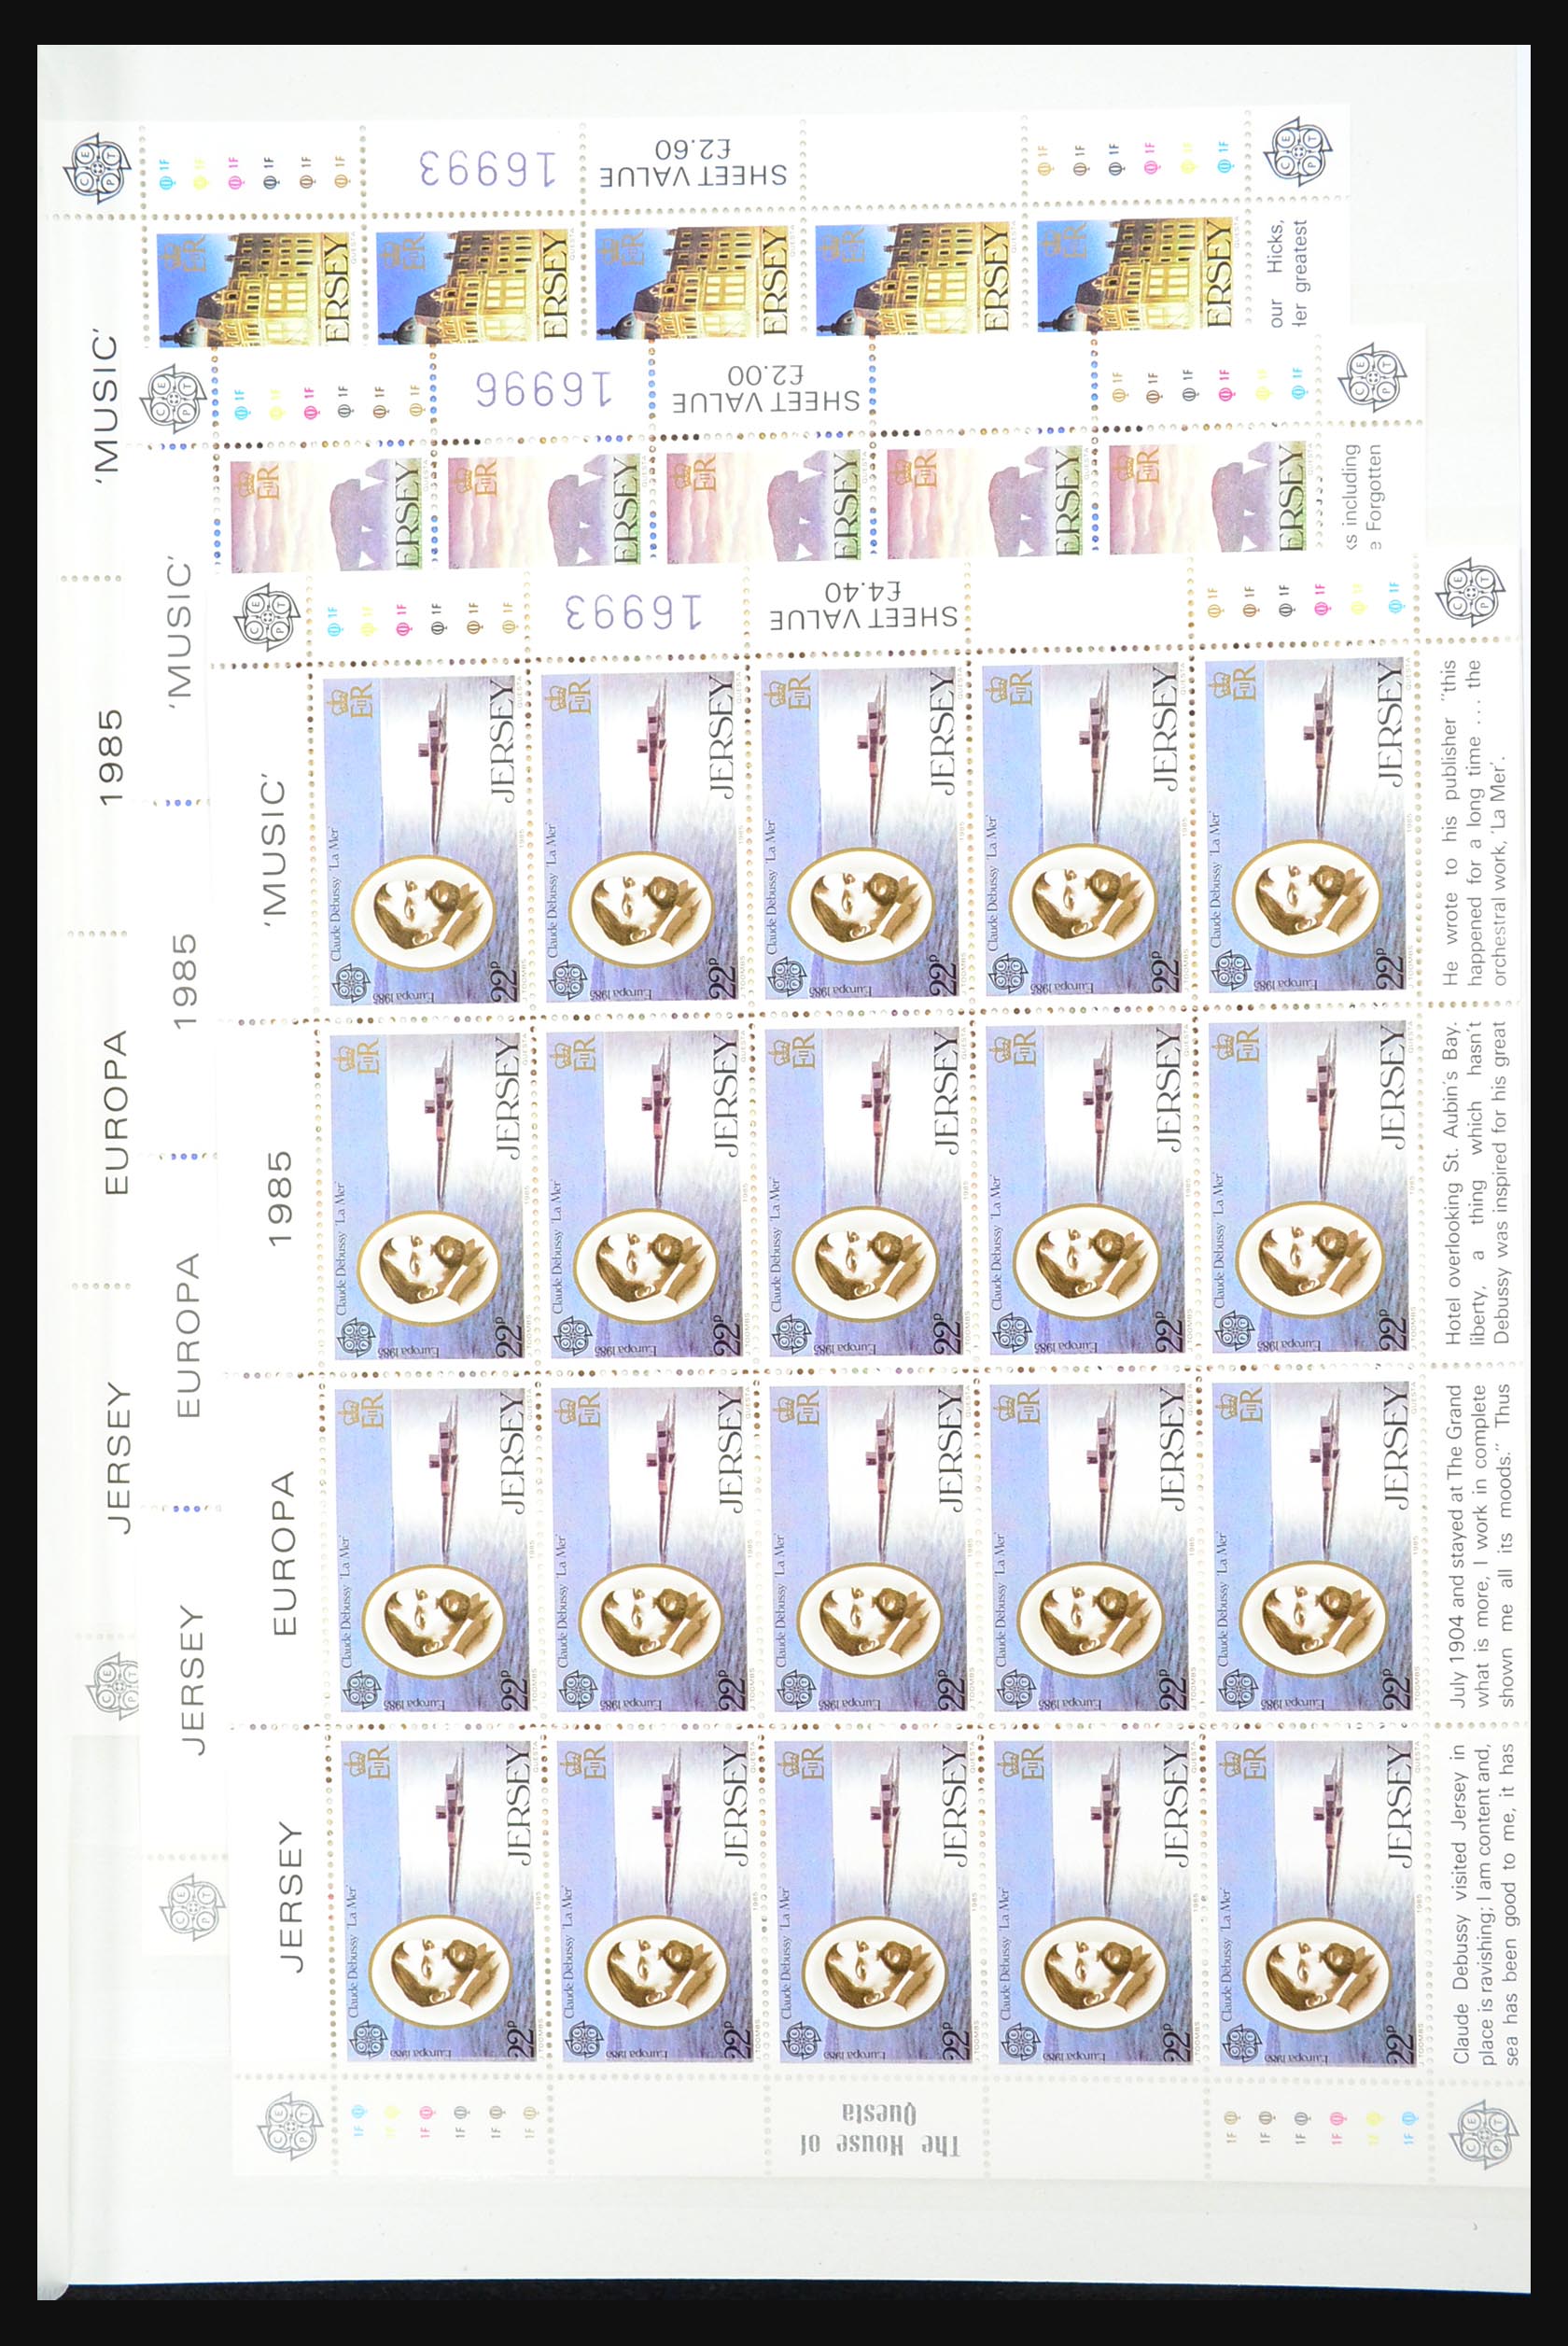 31249 011 - 31249 Channel Islands souvenir sheets and sheetlets 1978-1997.